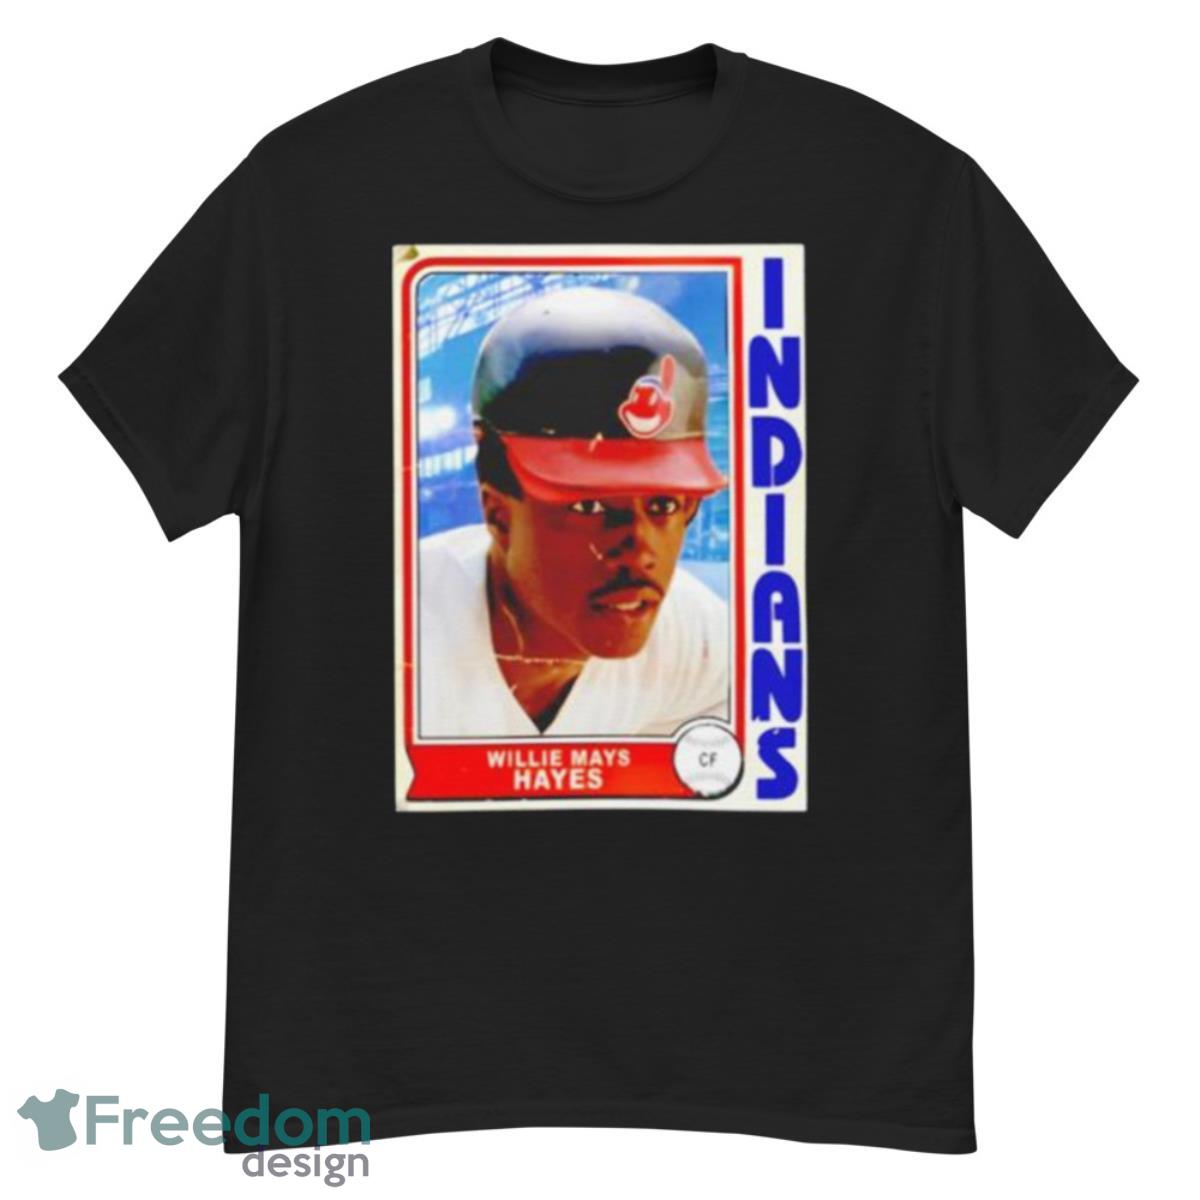 Willie Mays Hayes CF baseball retro trading shirt - G500 Men’s Classic T-Shirt